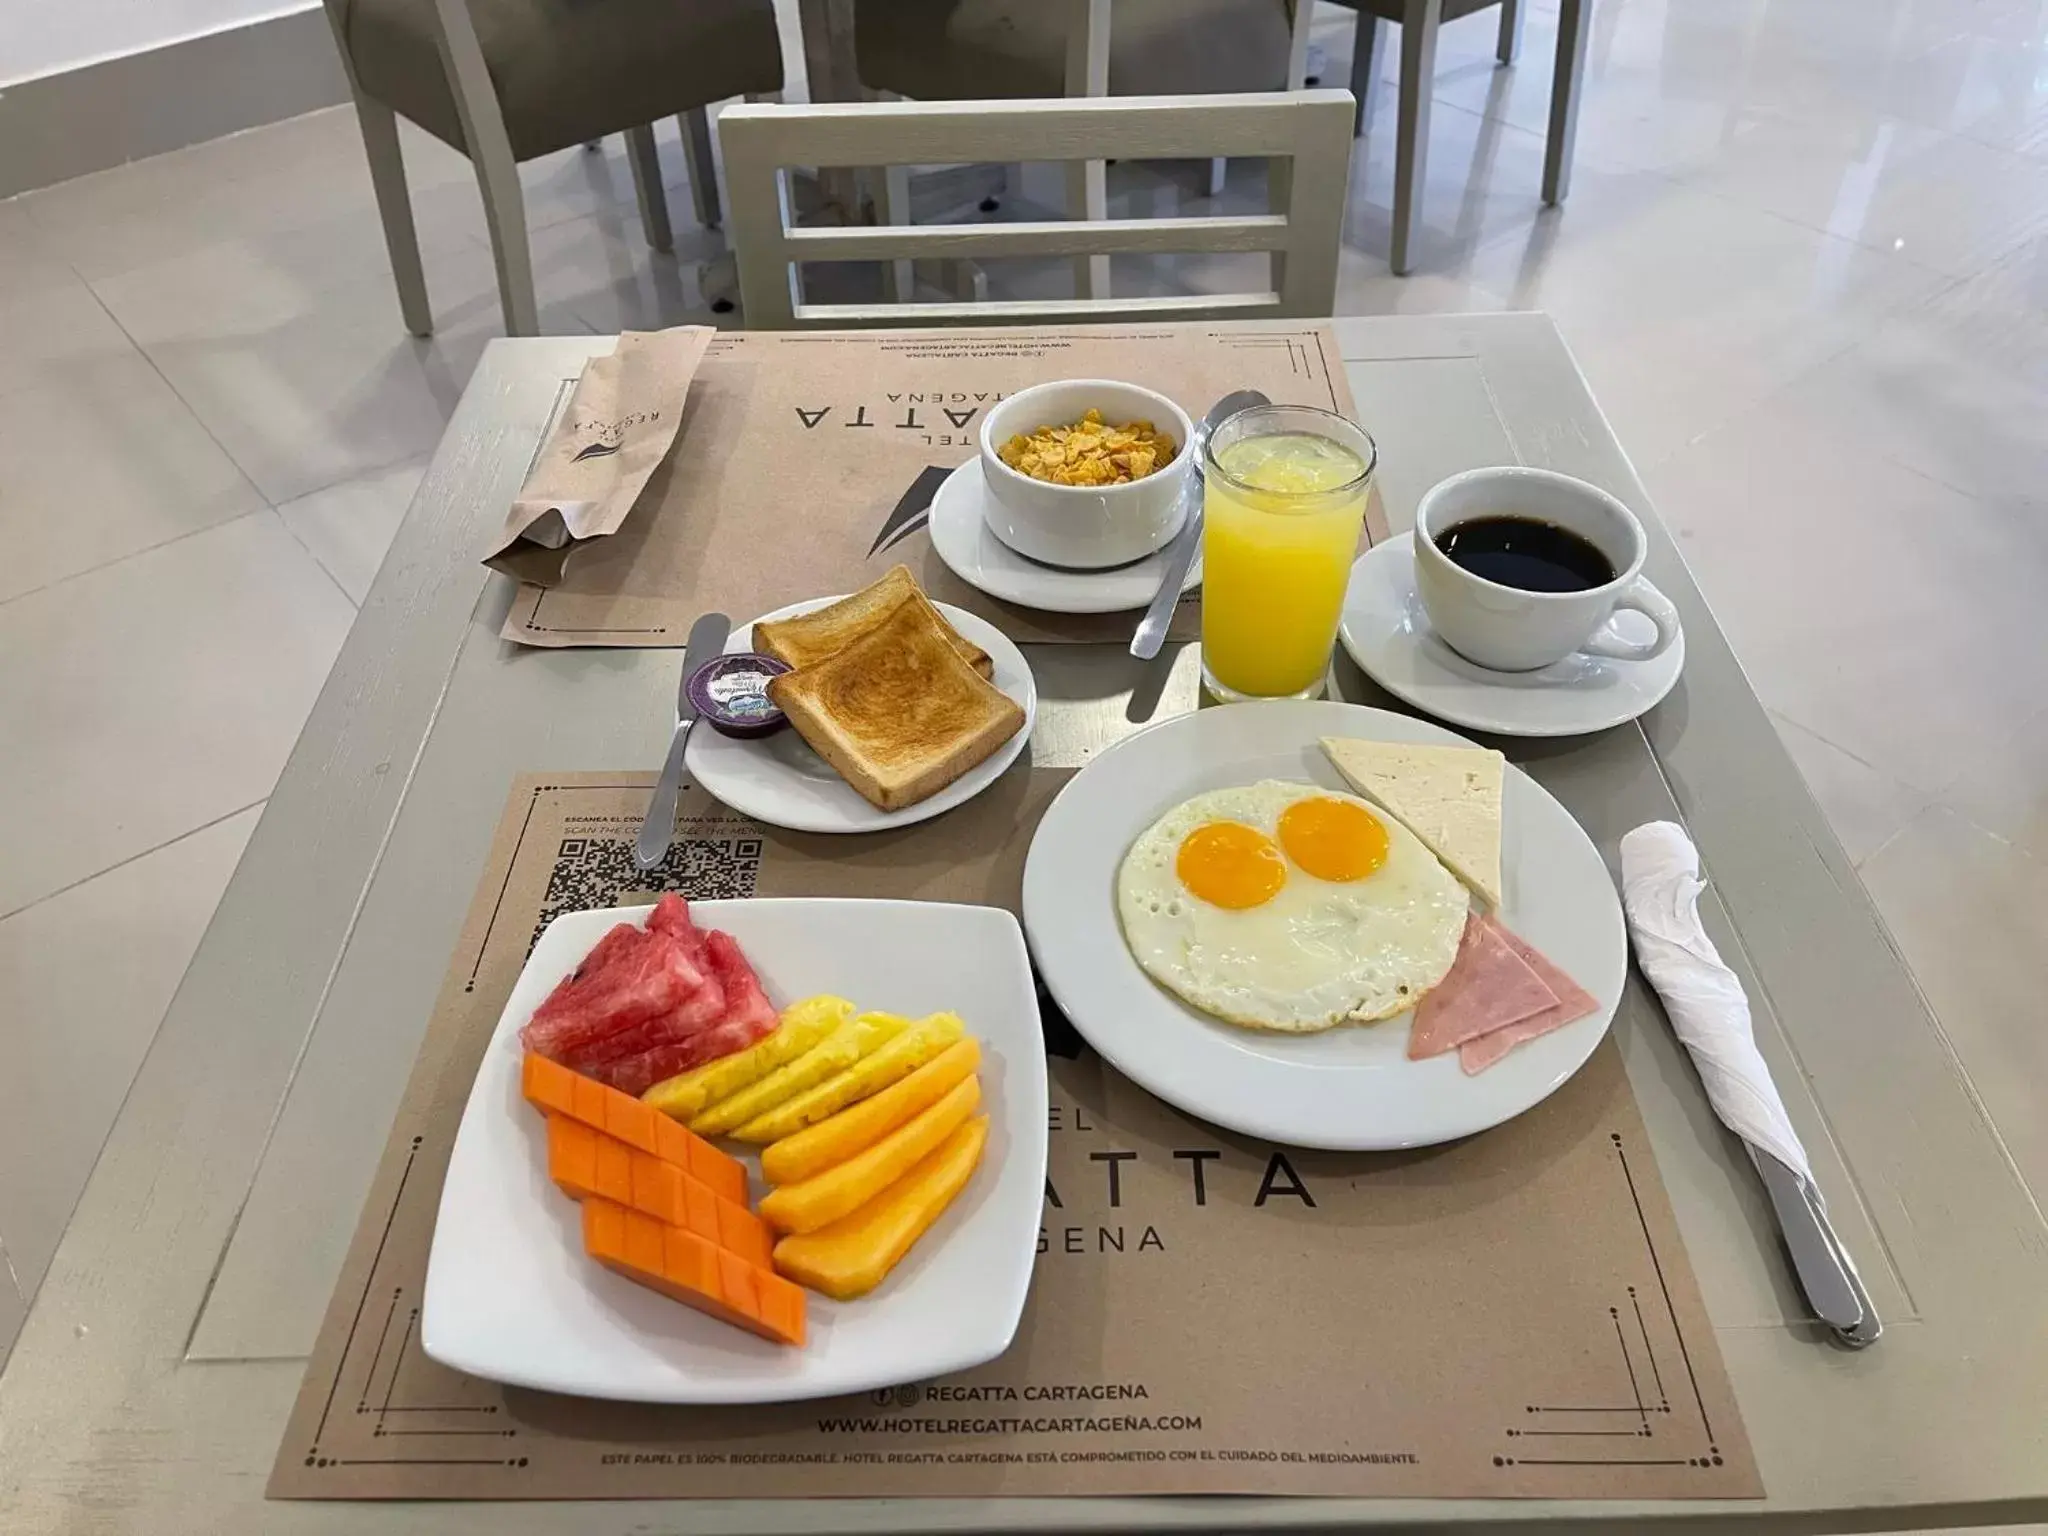 Breakfast in Hotel Regatta Cartagena